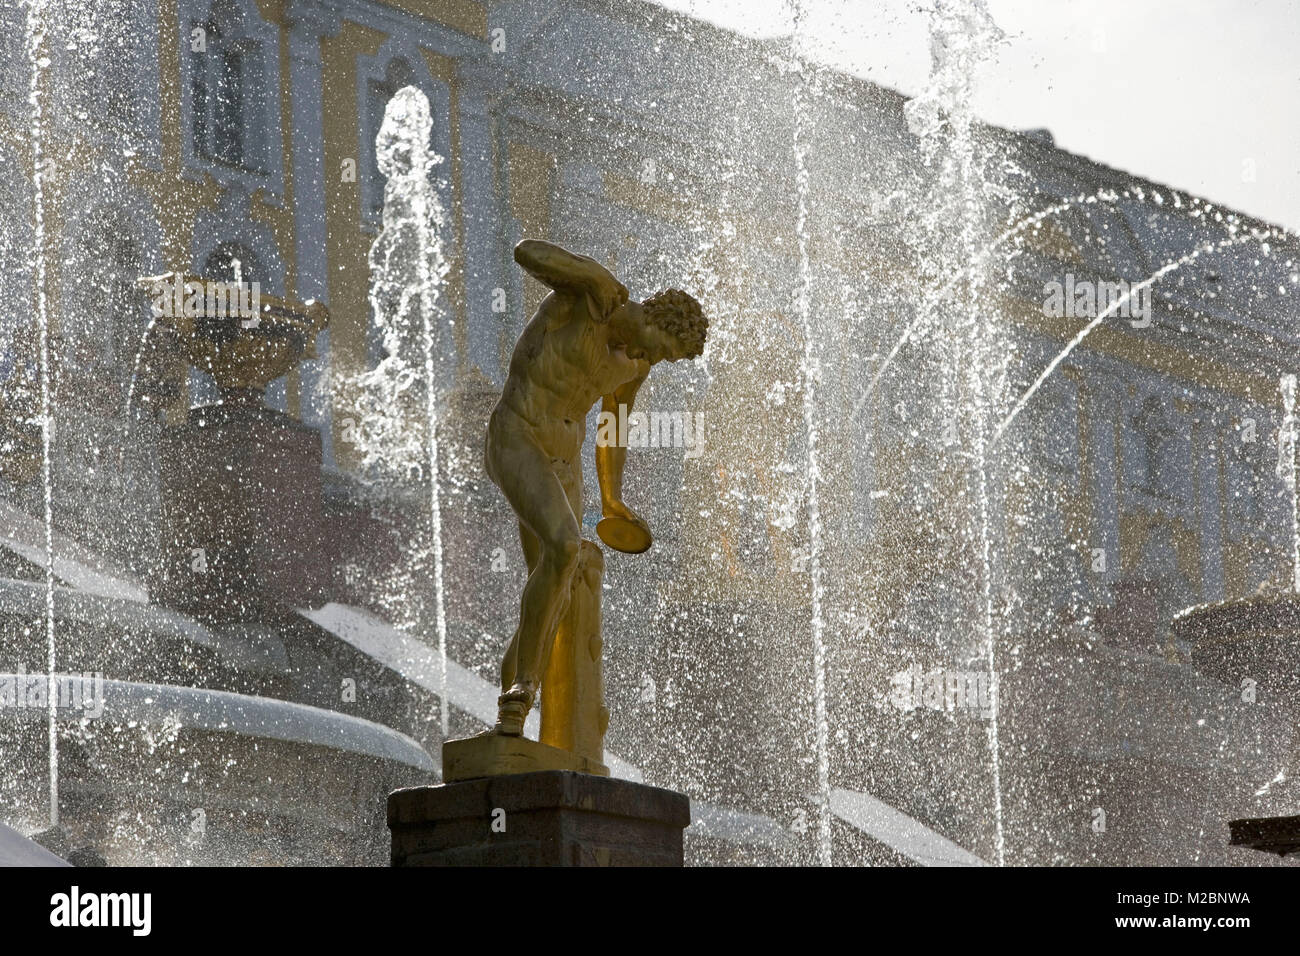 Russland. Sankt Petersburg. Sommerpalast Peterhof. Statuen und Brunnen im Garten von Peterhof. UNESCO-Weltkulturerbe. Stockfoto